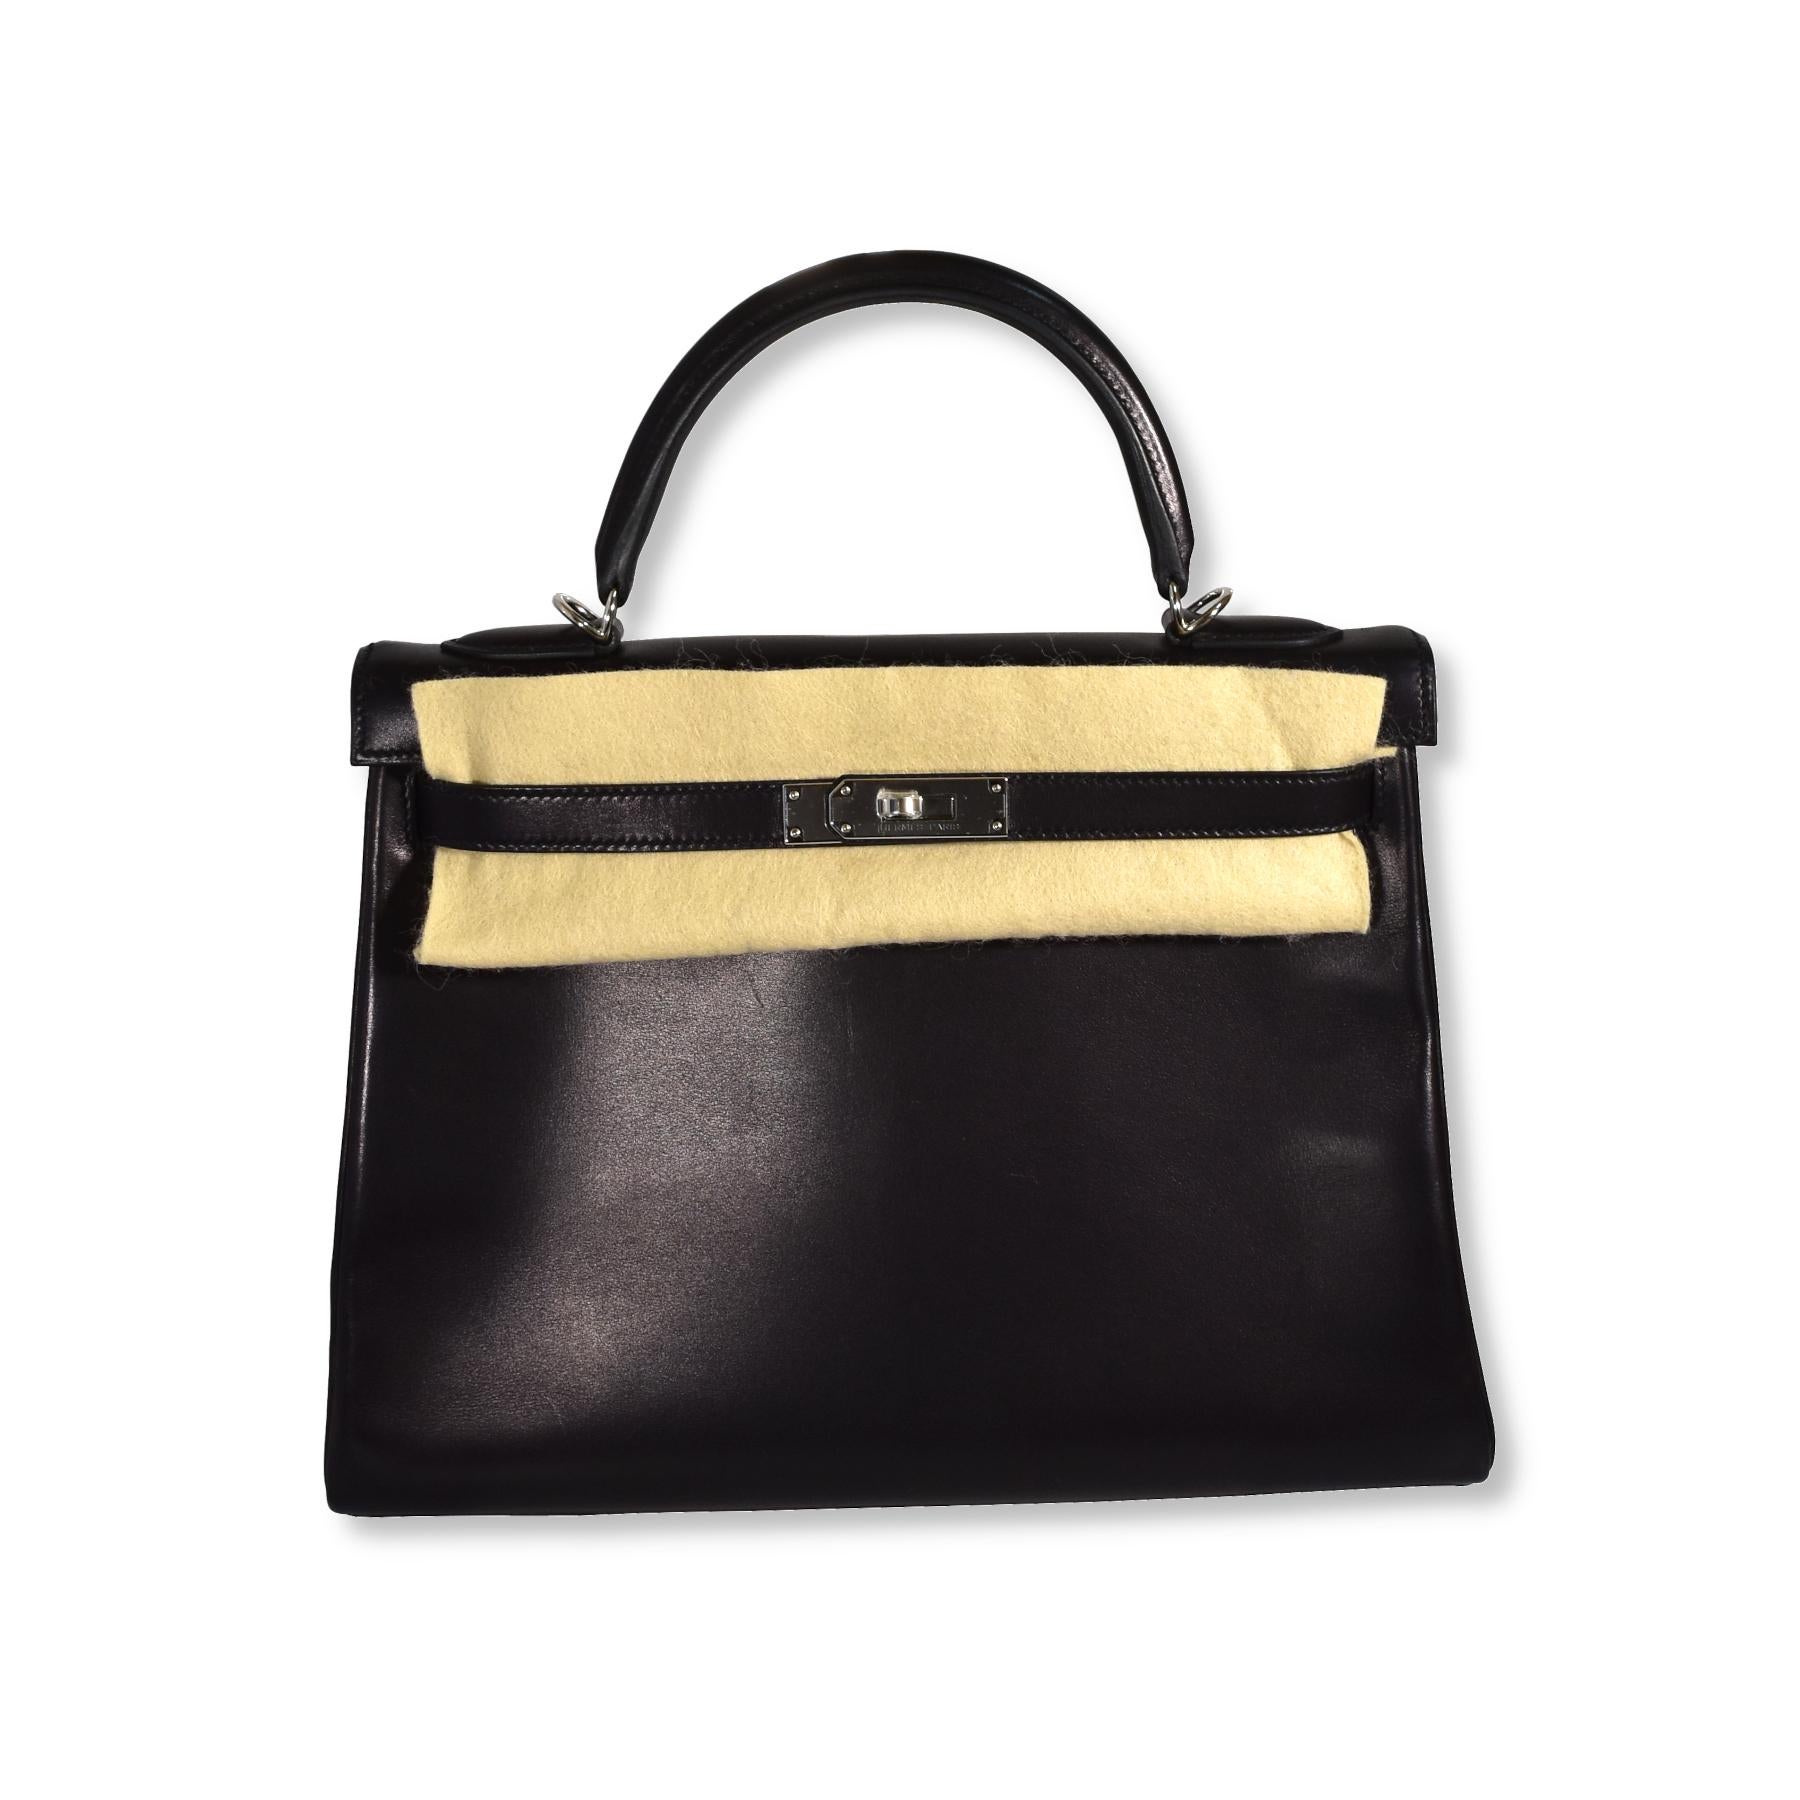 Designer: Hermes
Collection: Kelly 
Color: Black
Material: Leather 